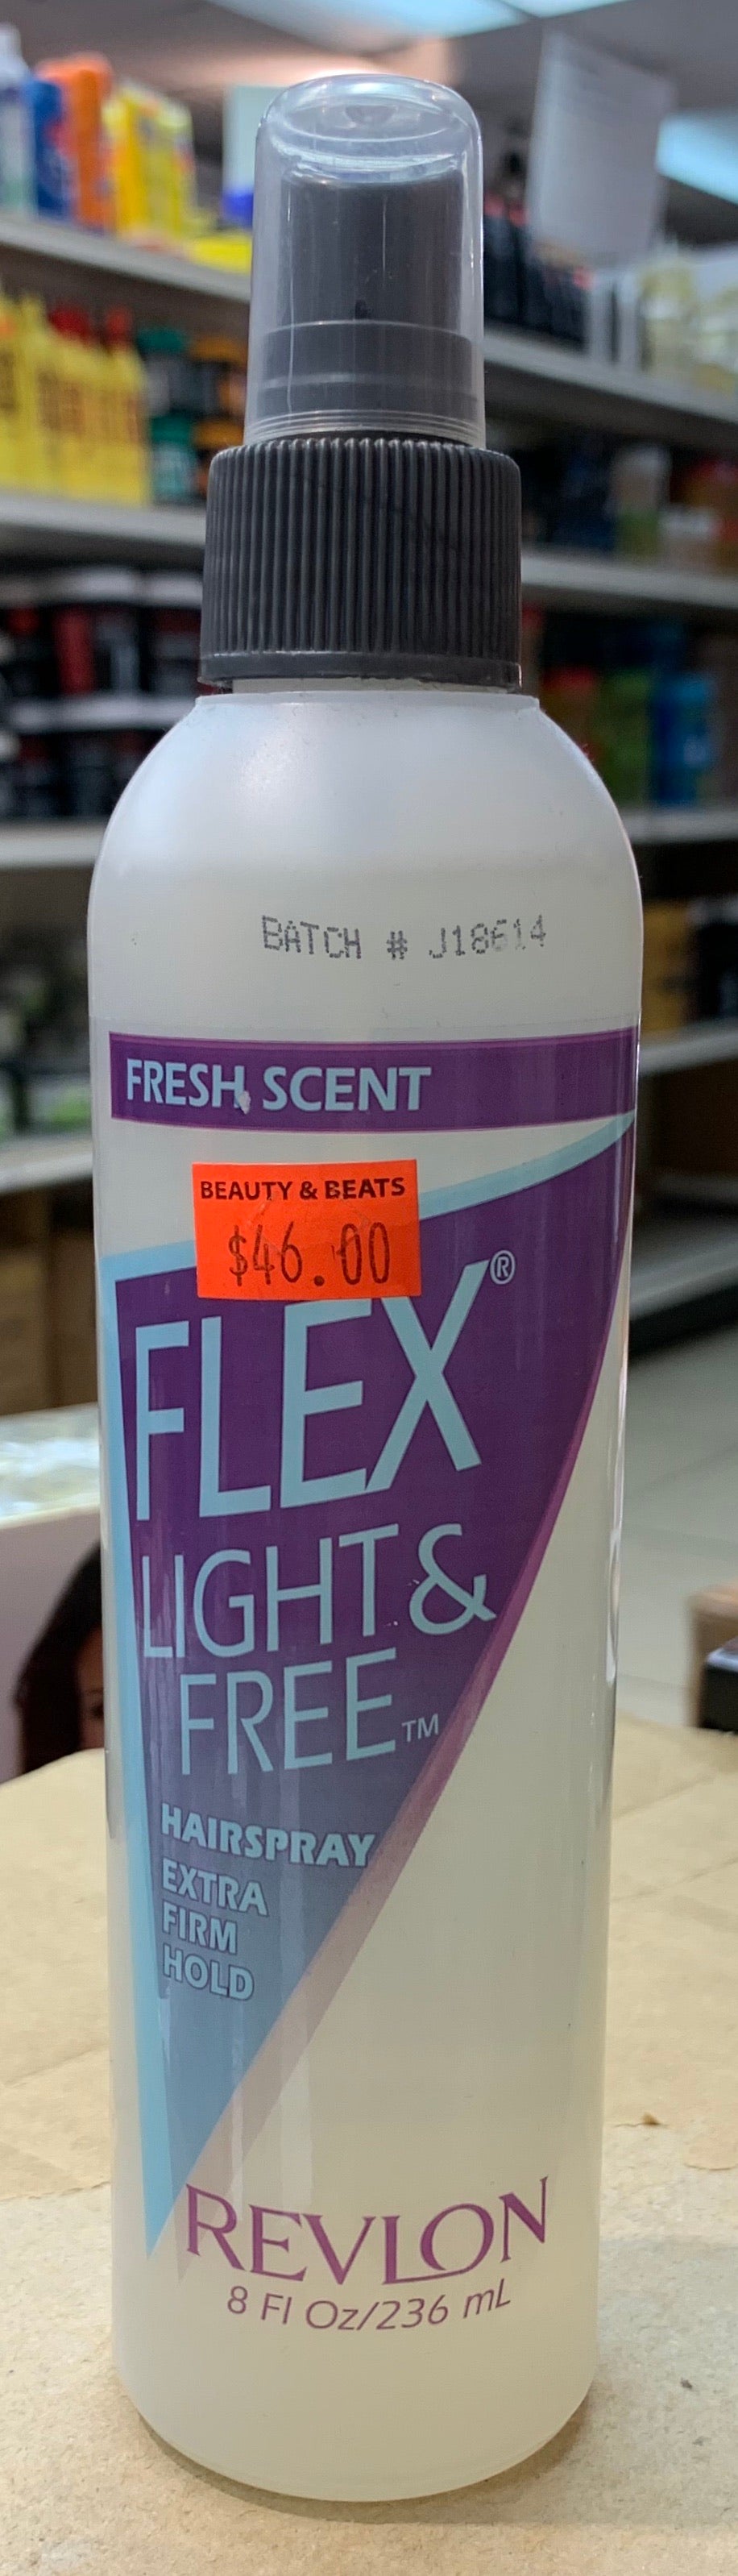 Revlon flex light & free hairspray firm/extra firm/spritz